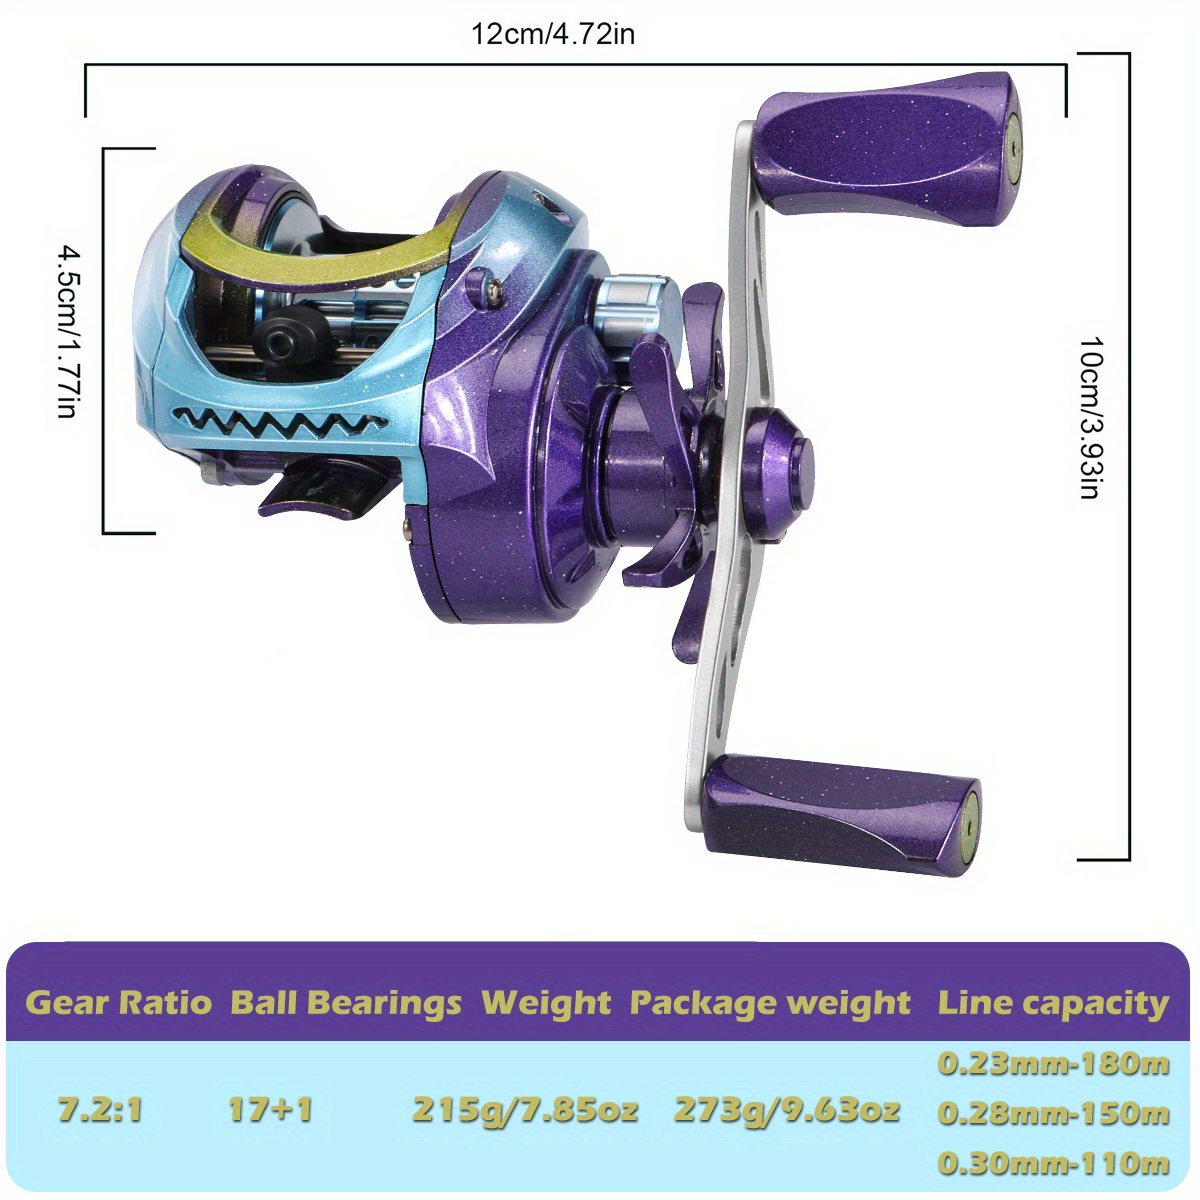 Sougayilang Purple Baitcasting Fishing Reel 7.2:1 High Speed Gear